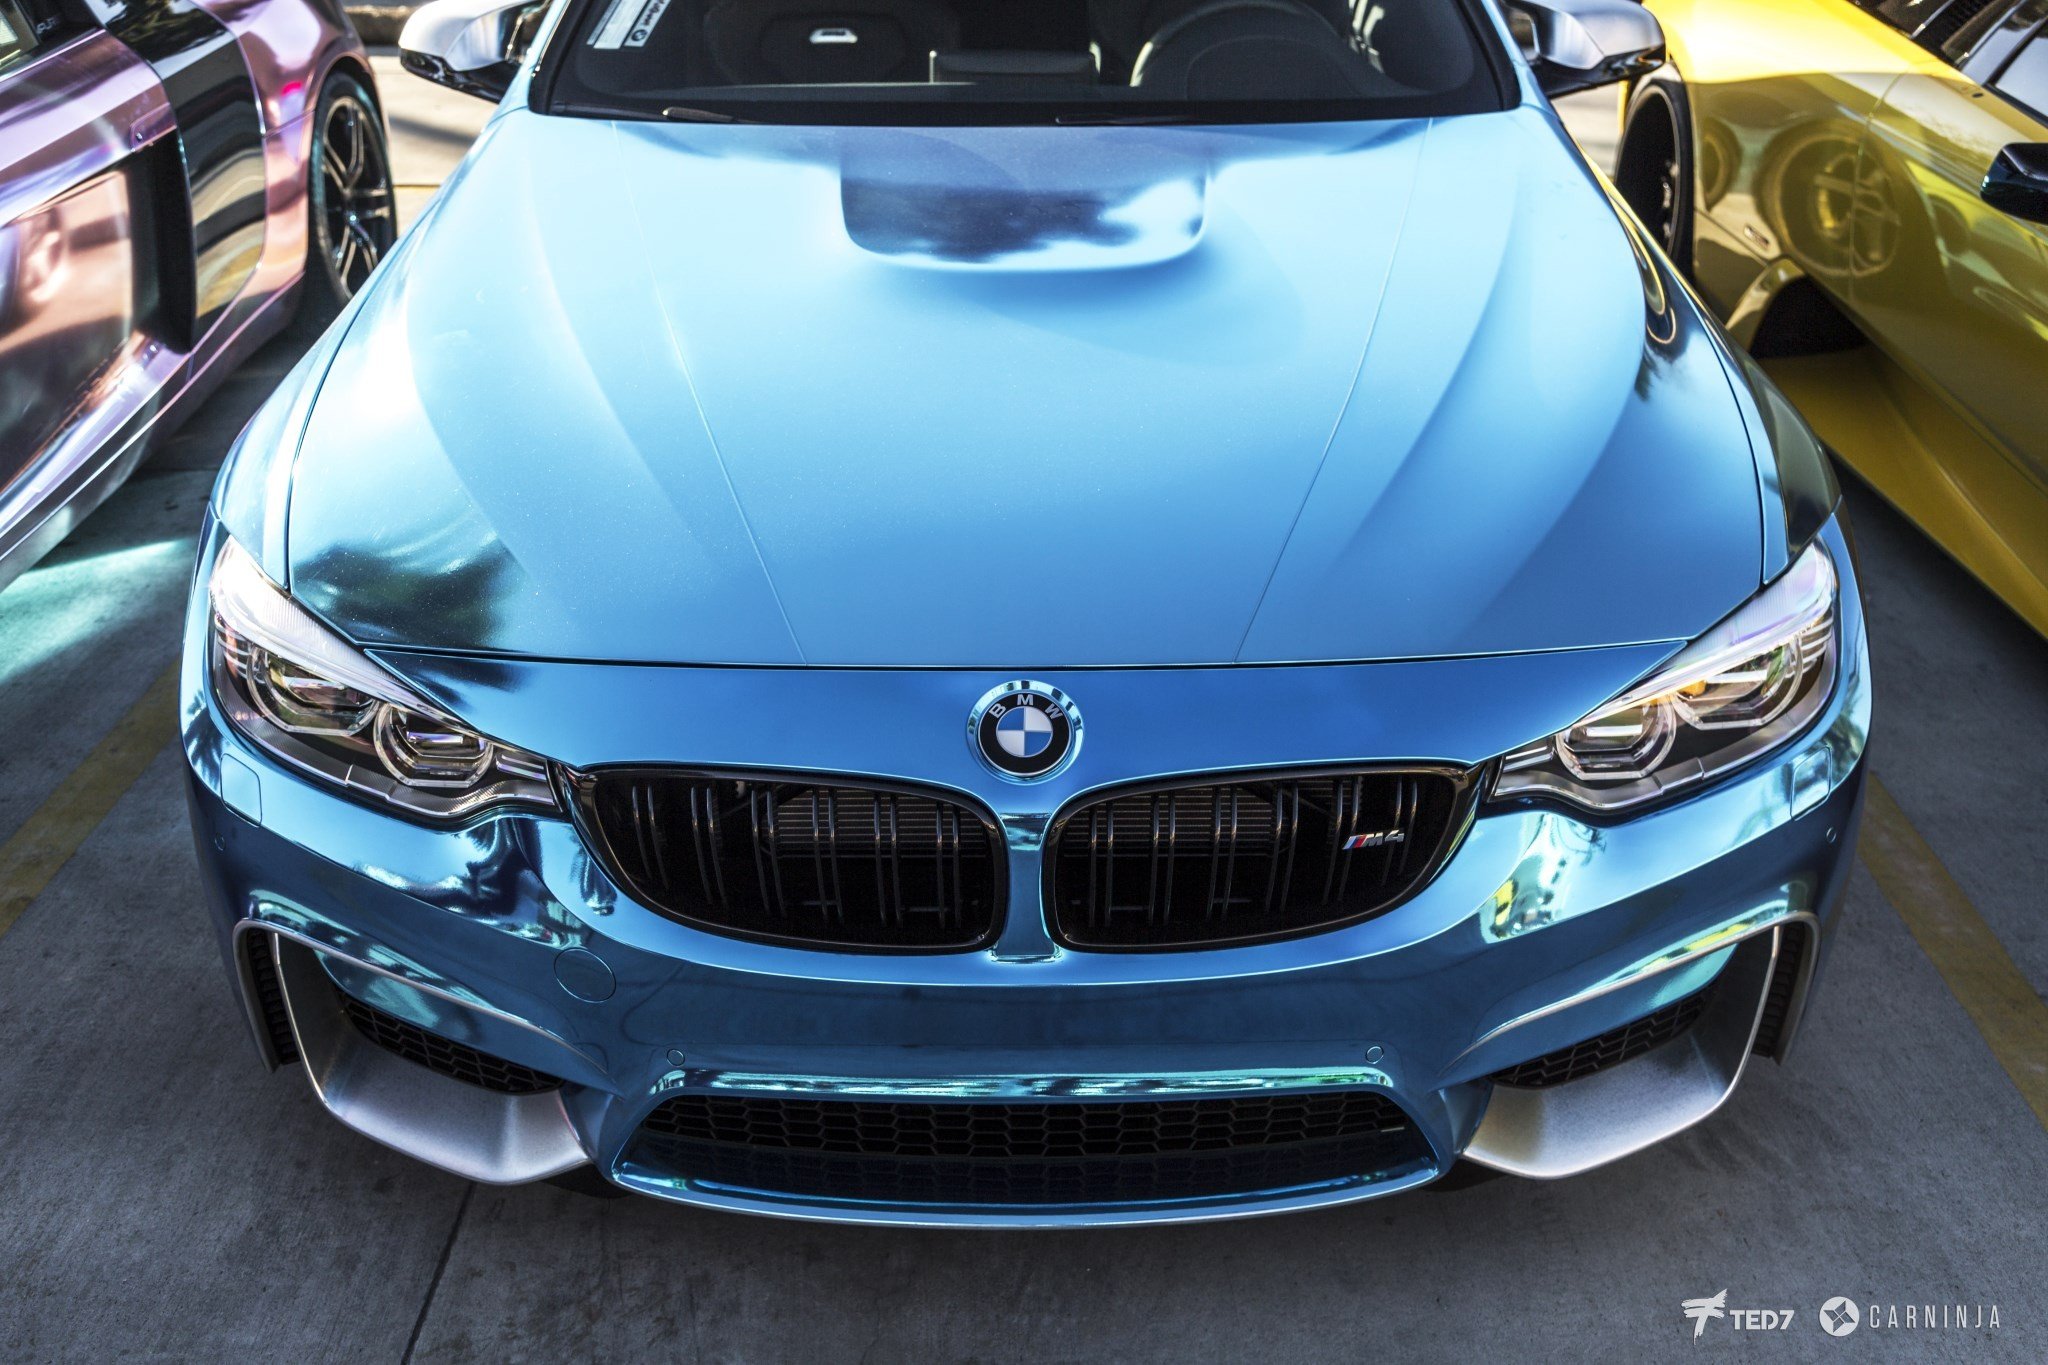 BMW M4 Coupe, Bmw x6, LB Performance, LB Works, Vossen, Carninja, Car Wallpaper